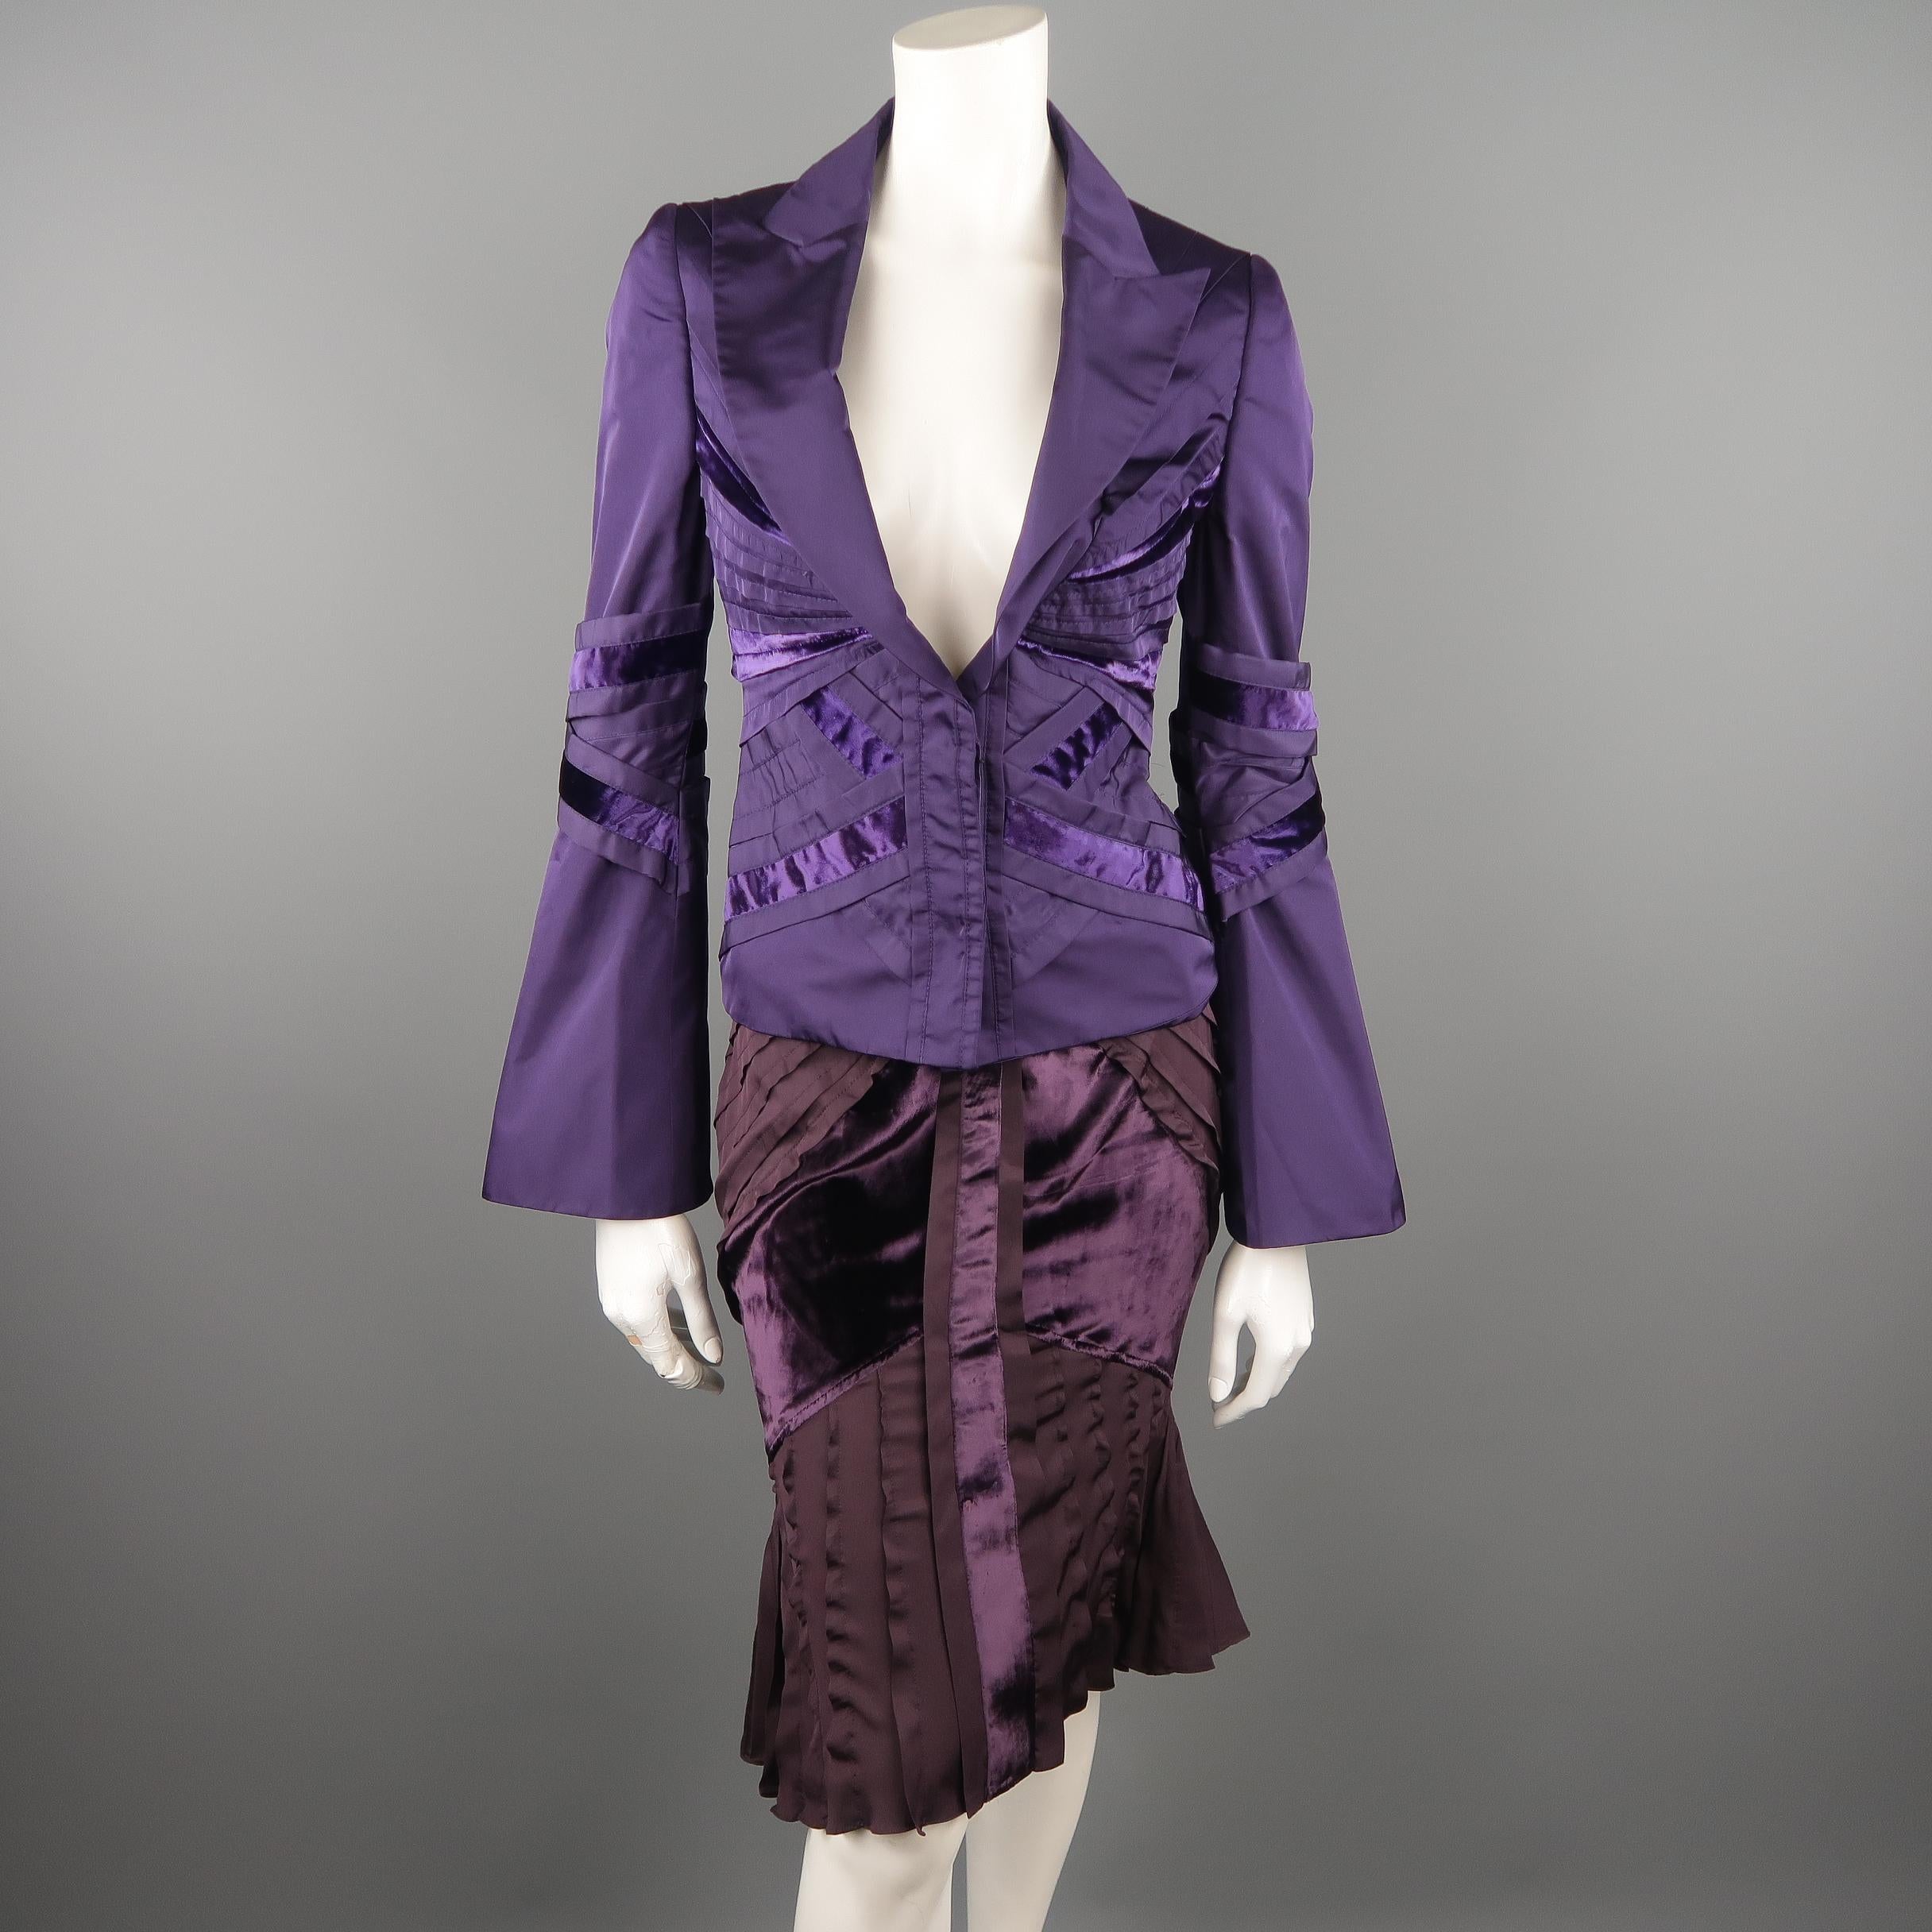 tom ford purple suit